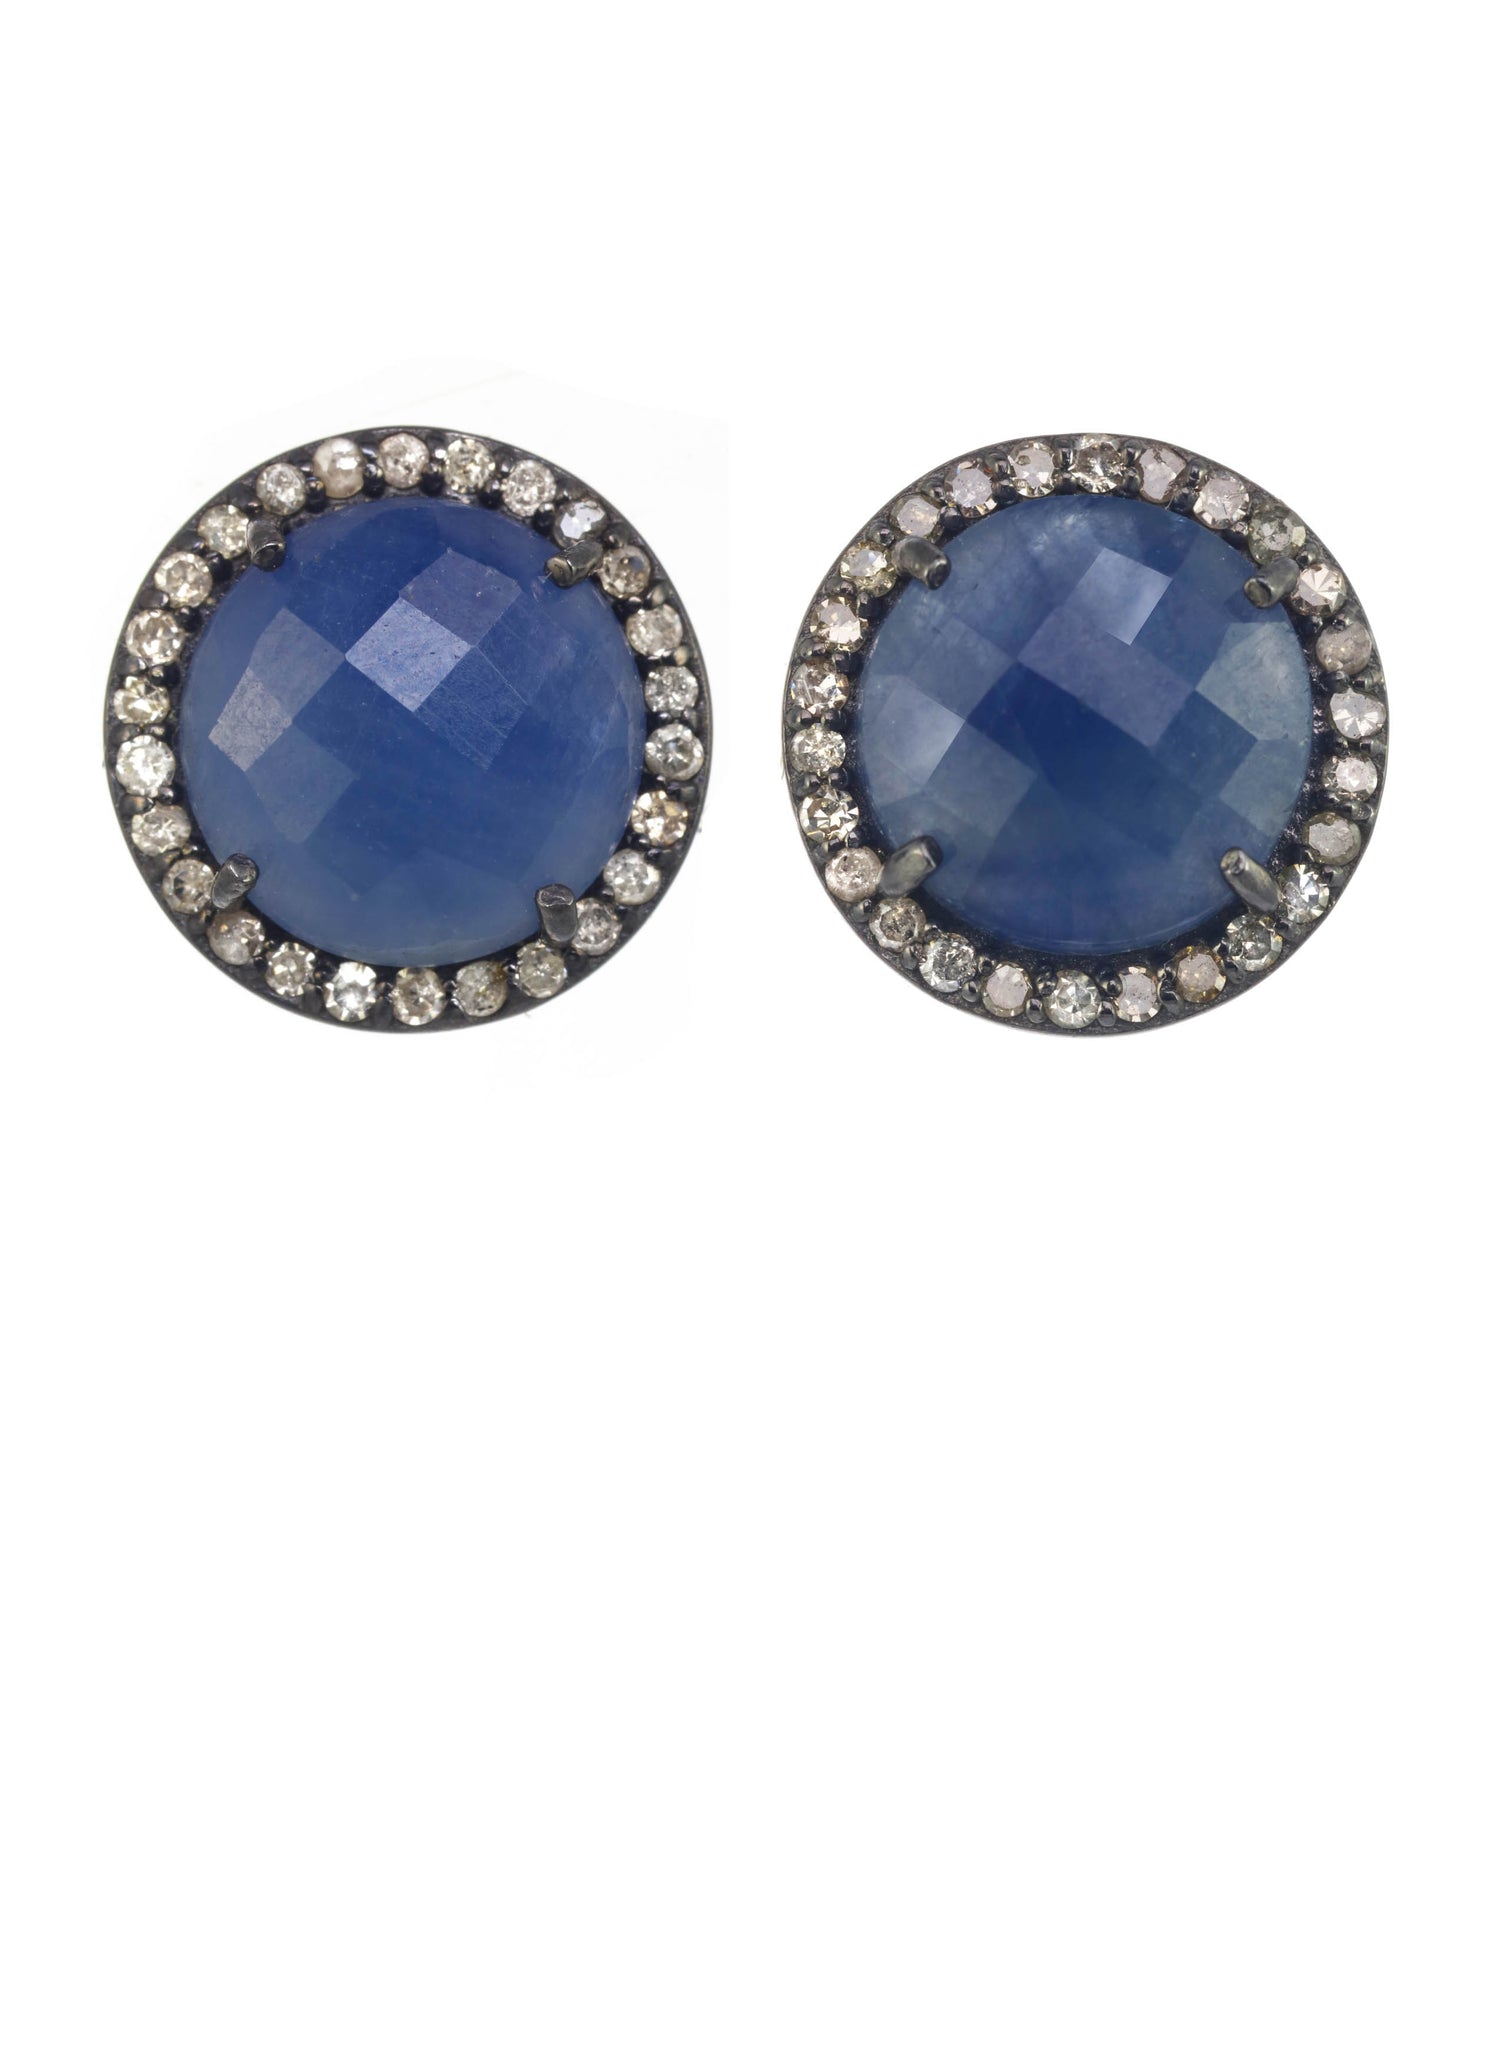 Blue Sapphire and Diamond Post Earrings